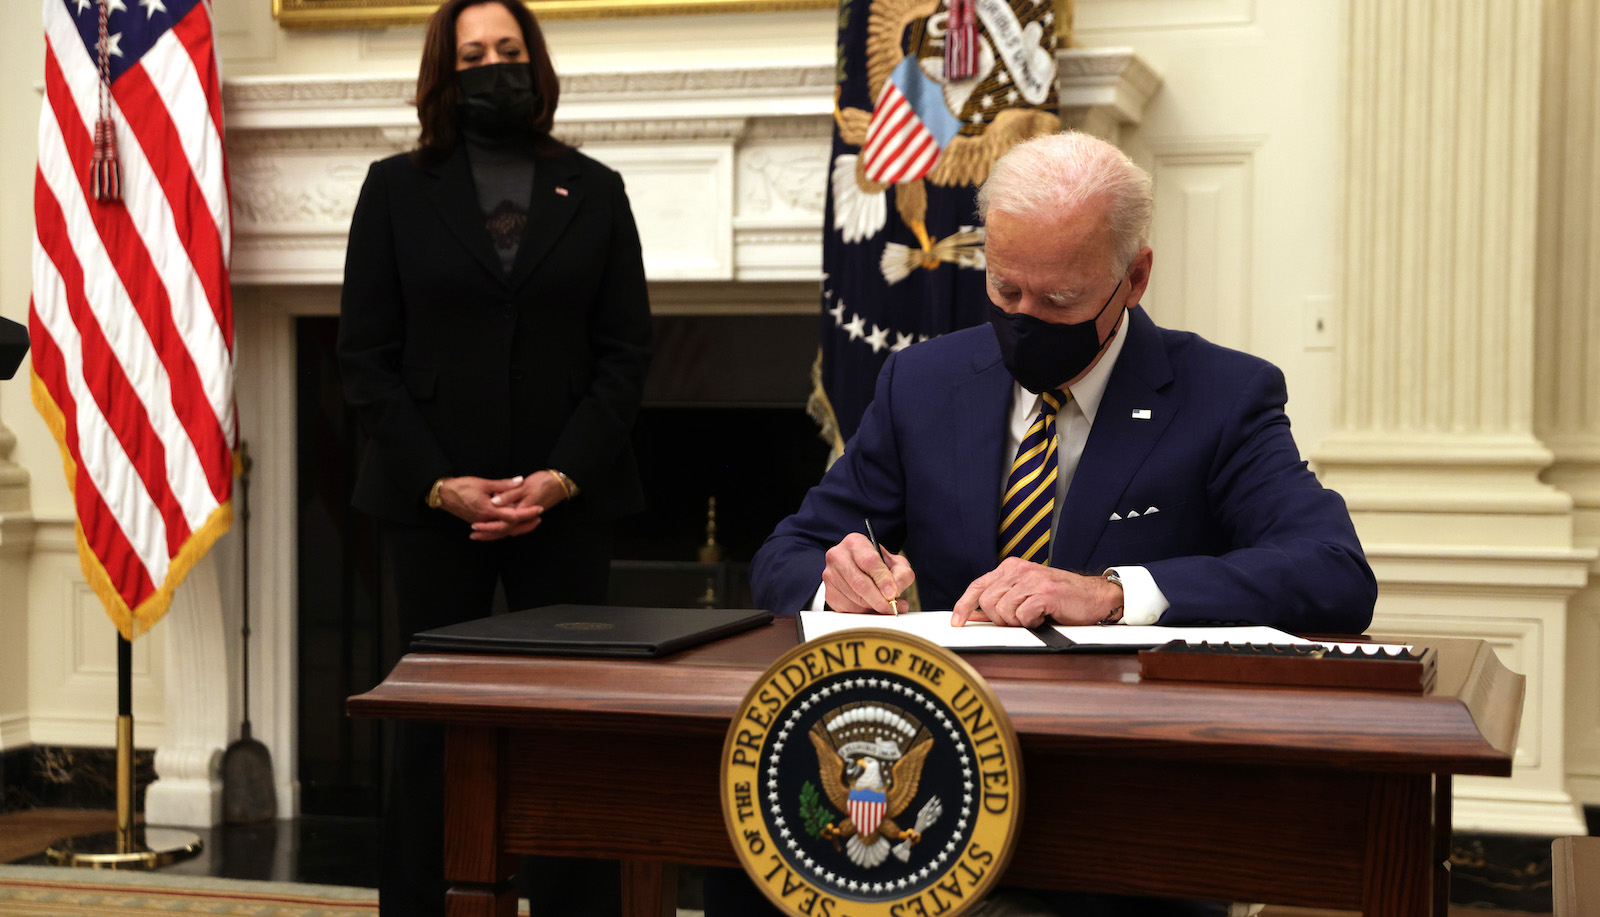 Biden signing executive orders behind his desk.